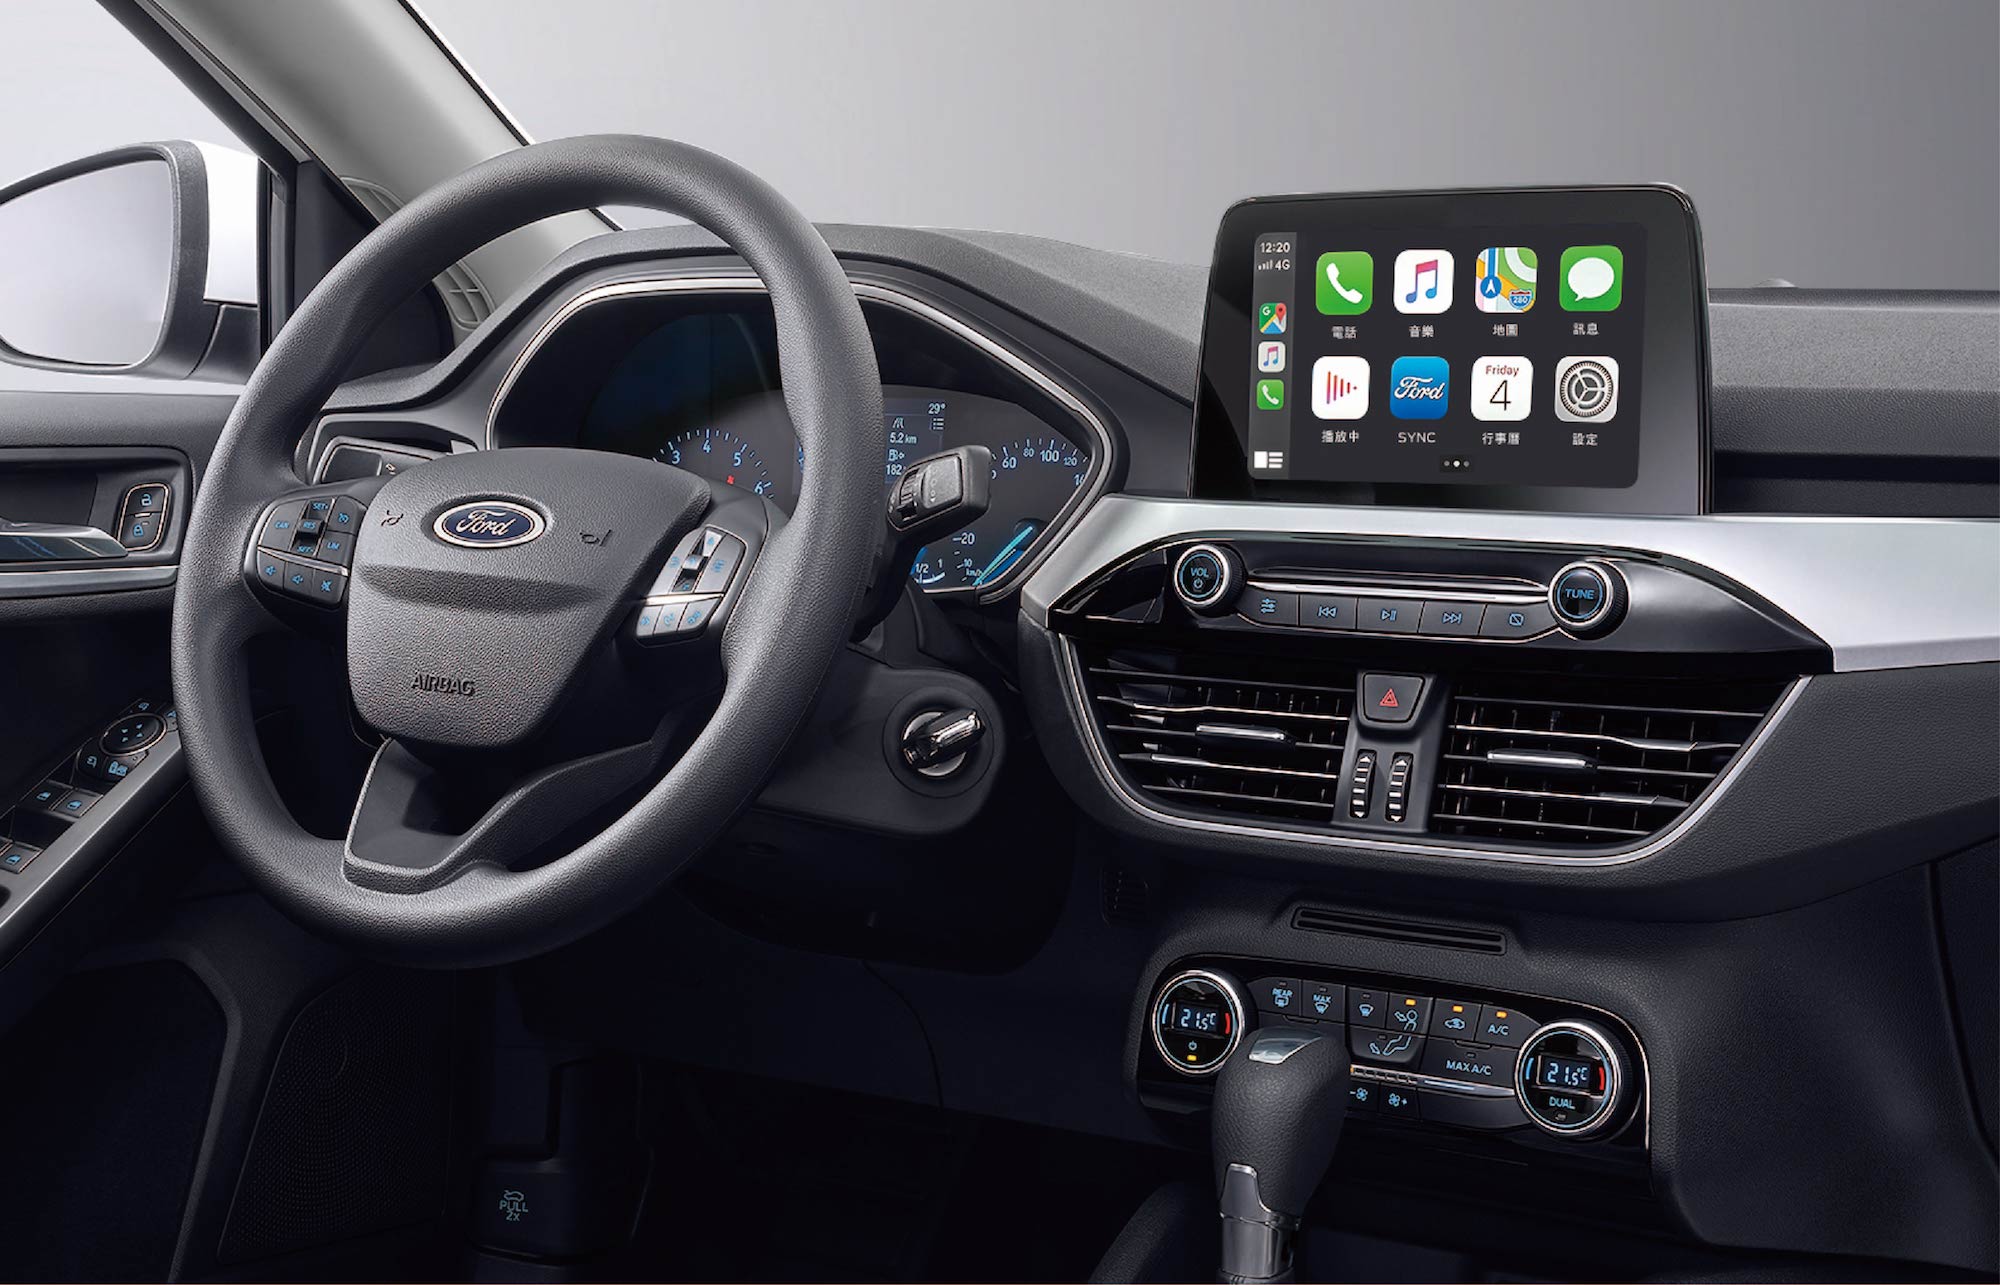 Ford Focus 全新四門美夢型／五門成真型搭載原廠 8 吋懸浮式全彩 LCD 觸控螢幕，內建 SYNC®2.5 娛樂通訊整合系統，同級唯一支援 Apple CarPlay® 與 Android Auto 智慧手機連結功能，並標配雙區恆溫空調。